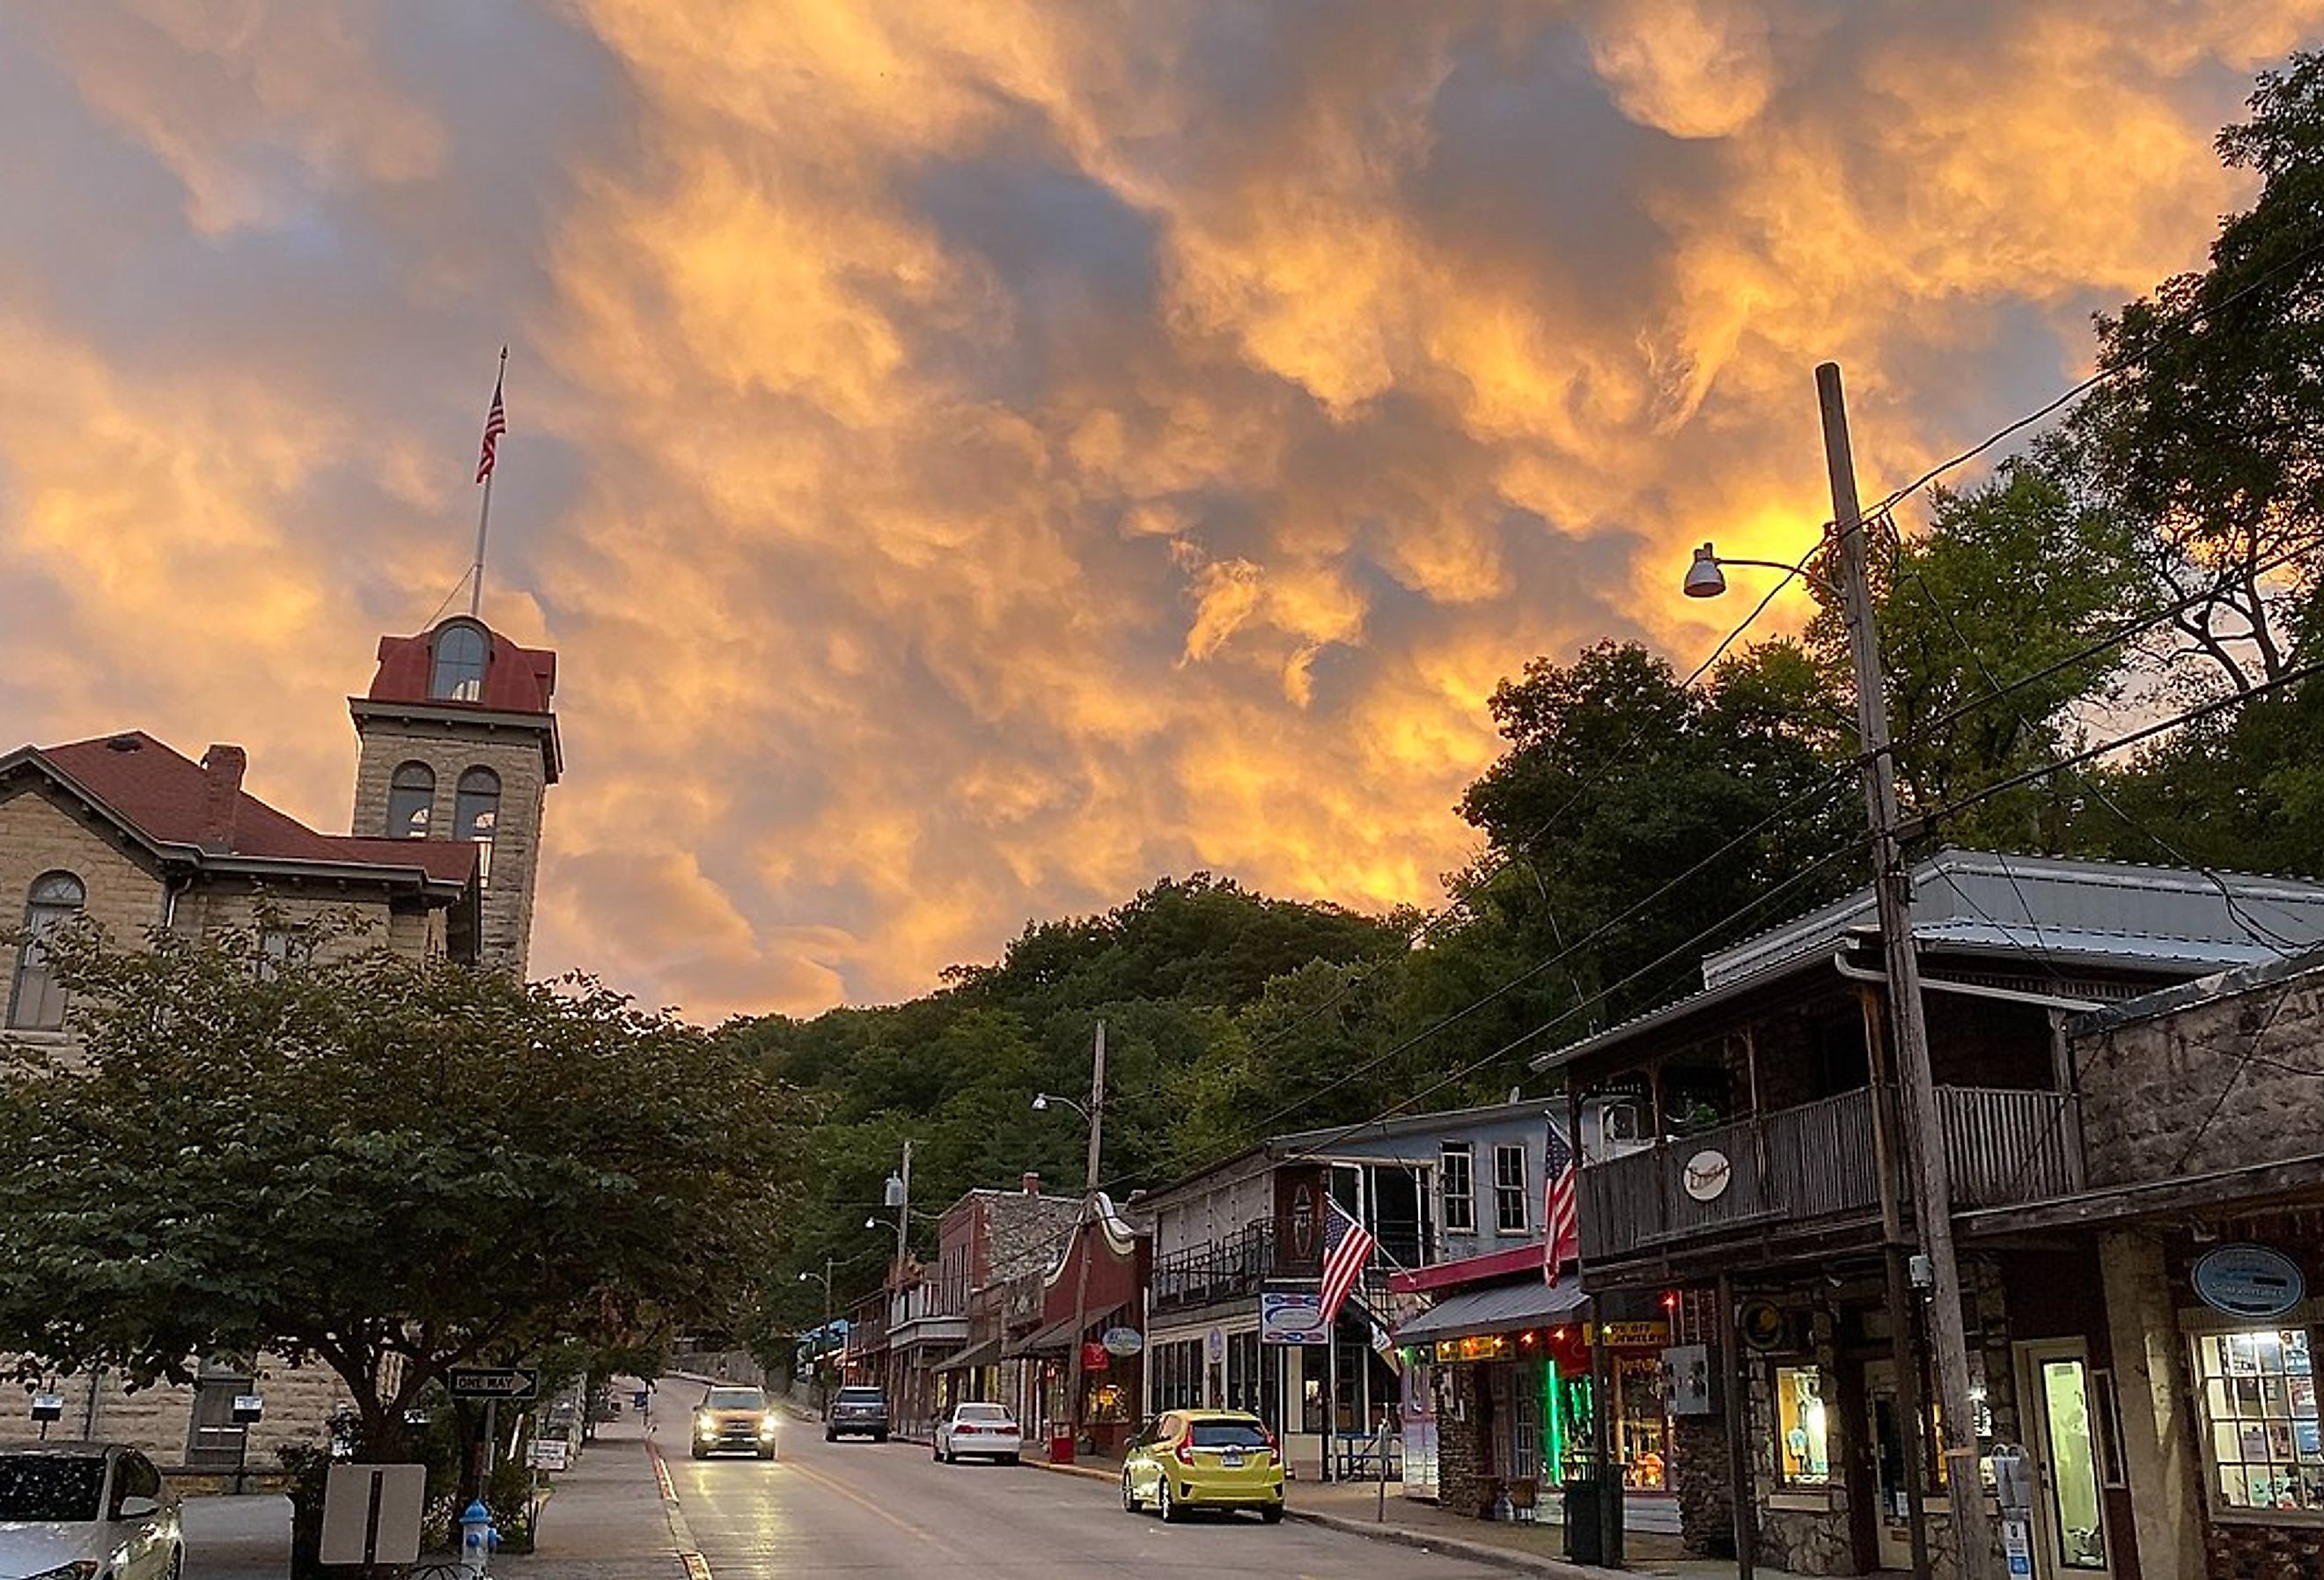 A beautiful sky over Main Street in downtown Eureka Springs. Image credit EurekaSpringsAR via Creative Commons